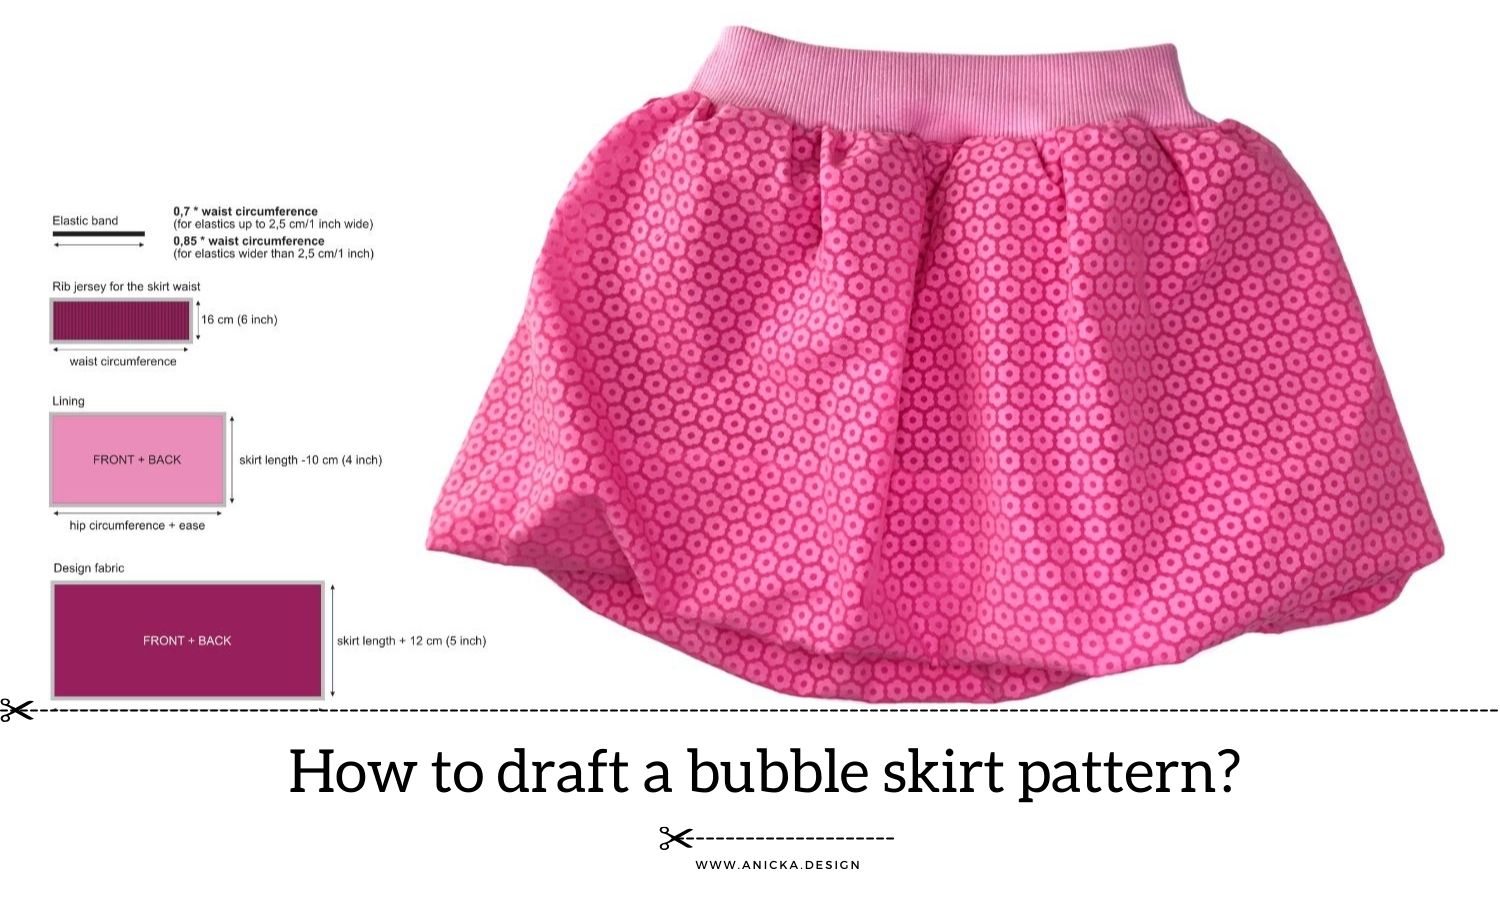 Pink bubble skirt and bubble skirt pattern.